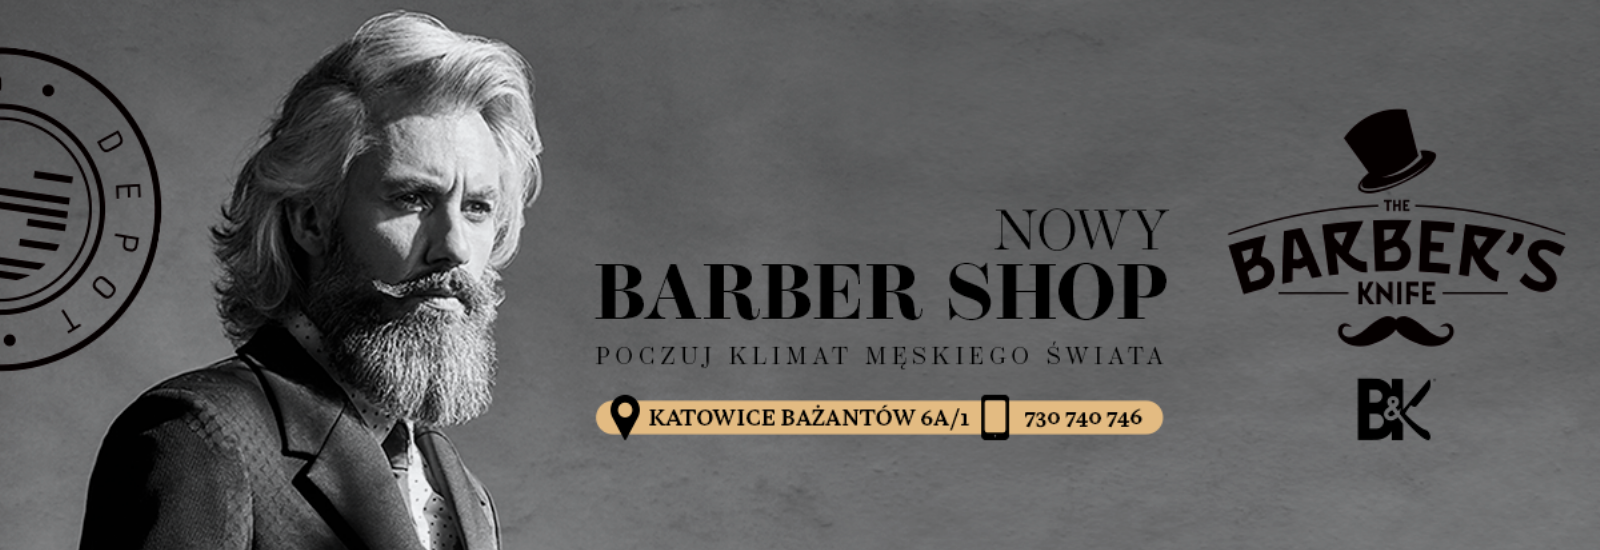 The Barber's Knife Bażantów, Katowice, slider-do-aktualnosci